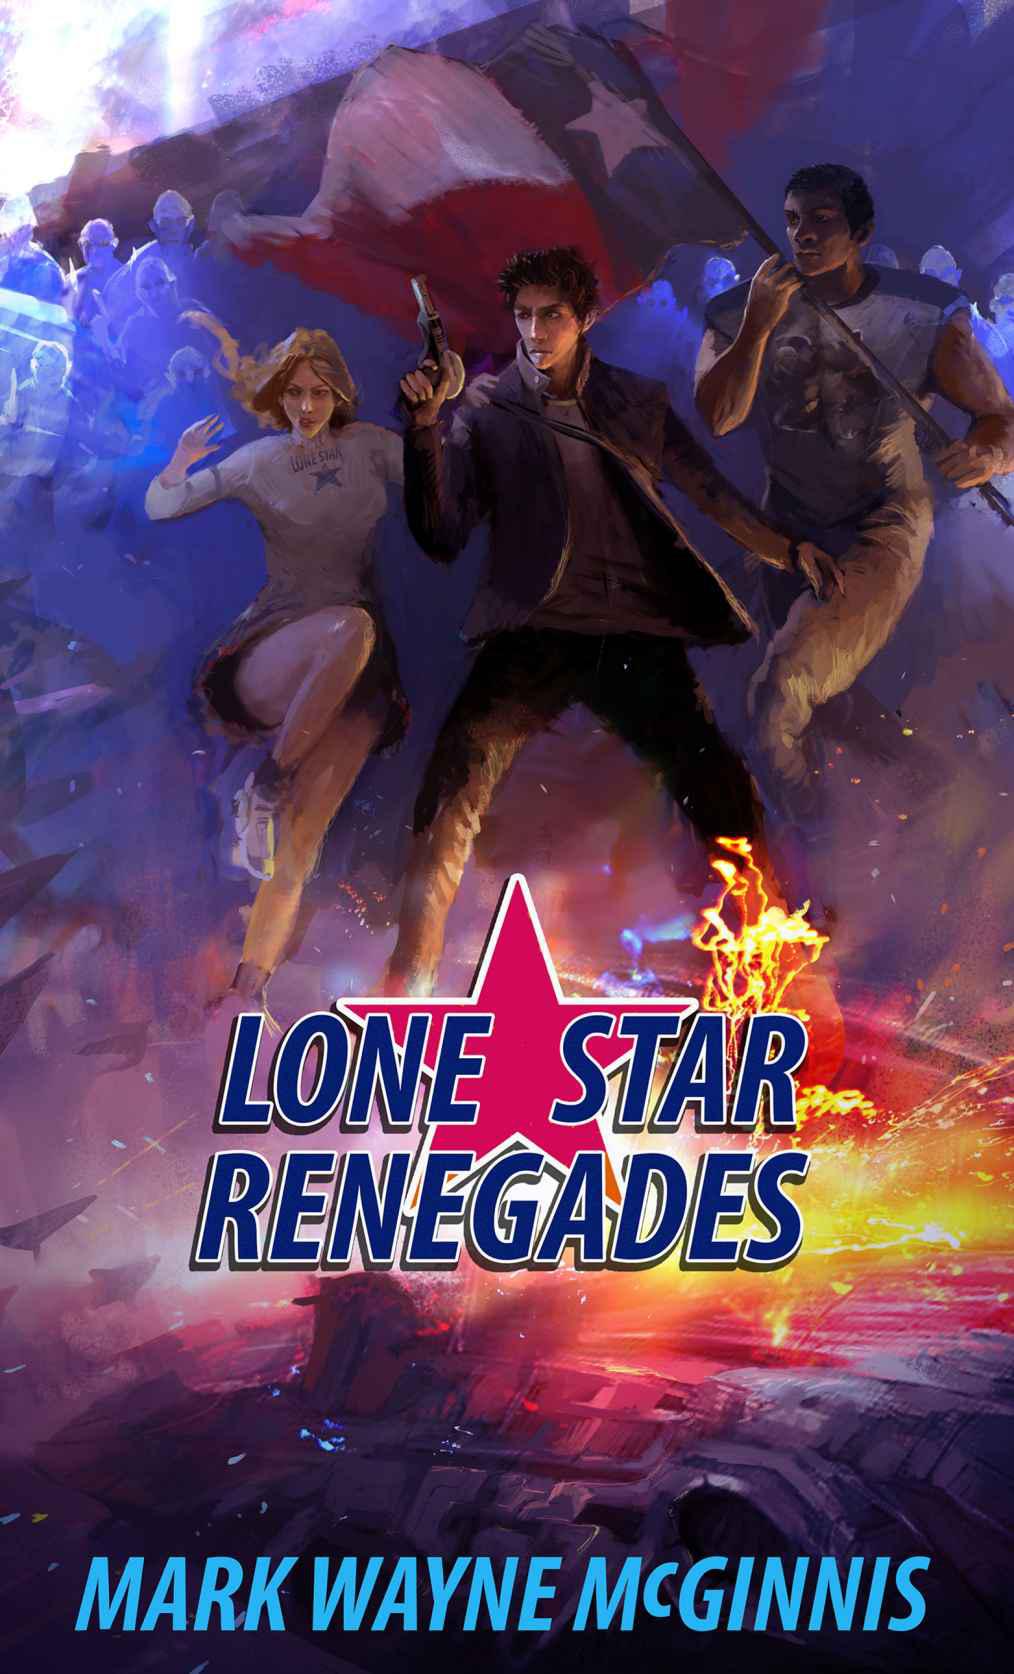 Lone Star Renegades by Mark Wayne McGinnis